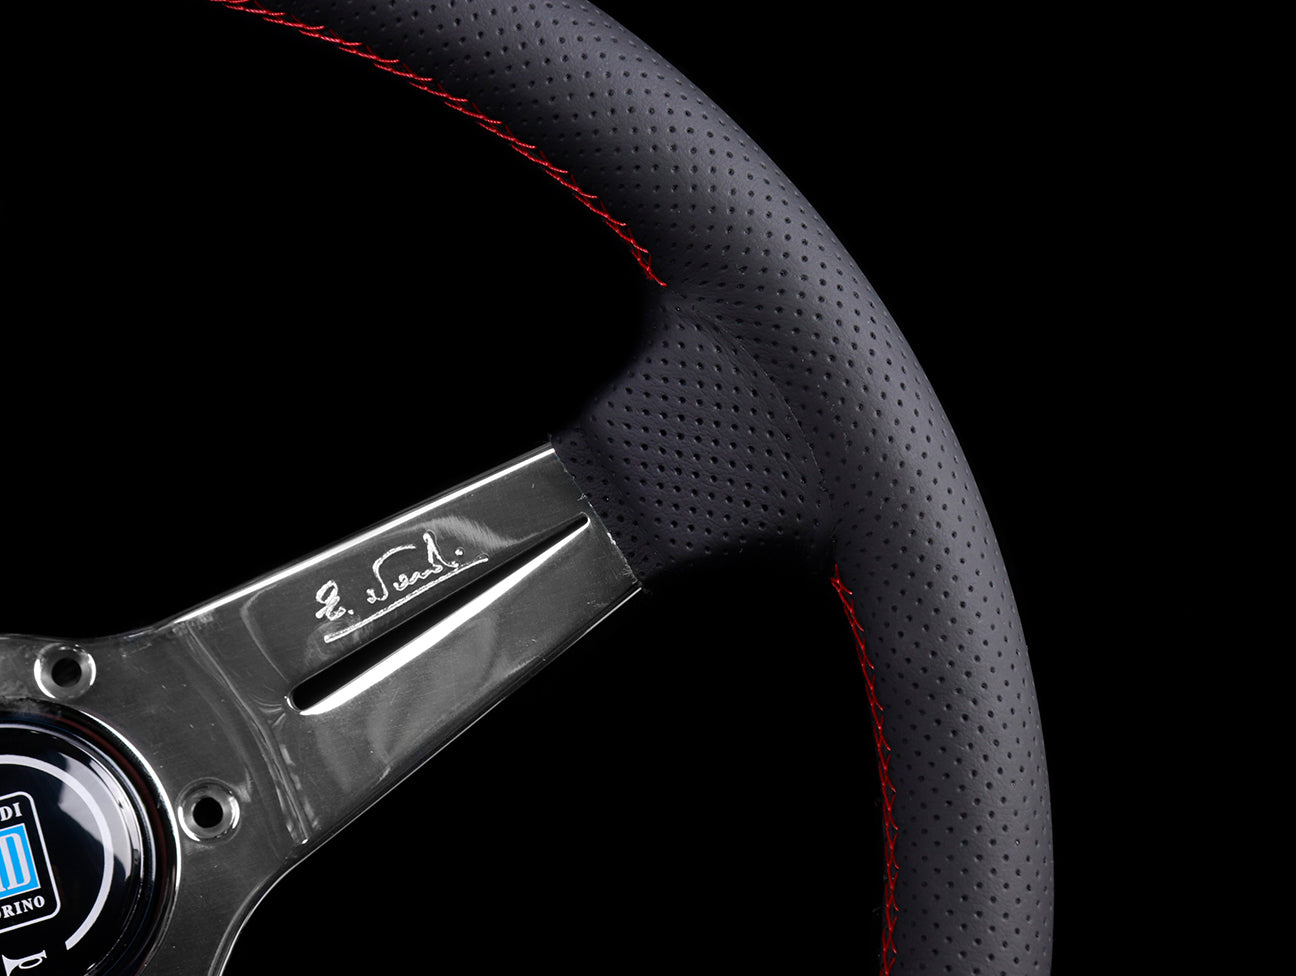 Nardi Sport Rally Deep Corn Steering Wheel - Perforated Leather w/ Polished Spokes